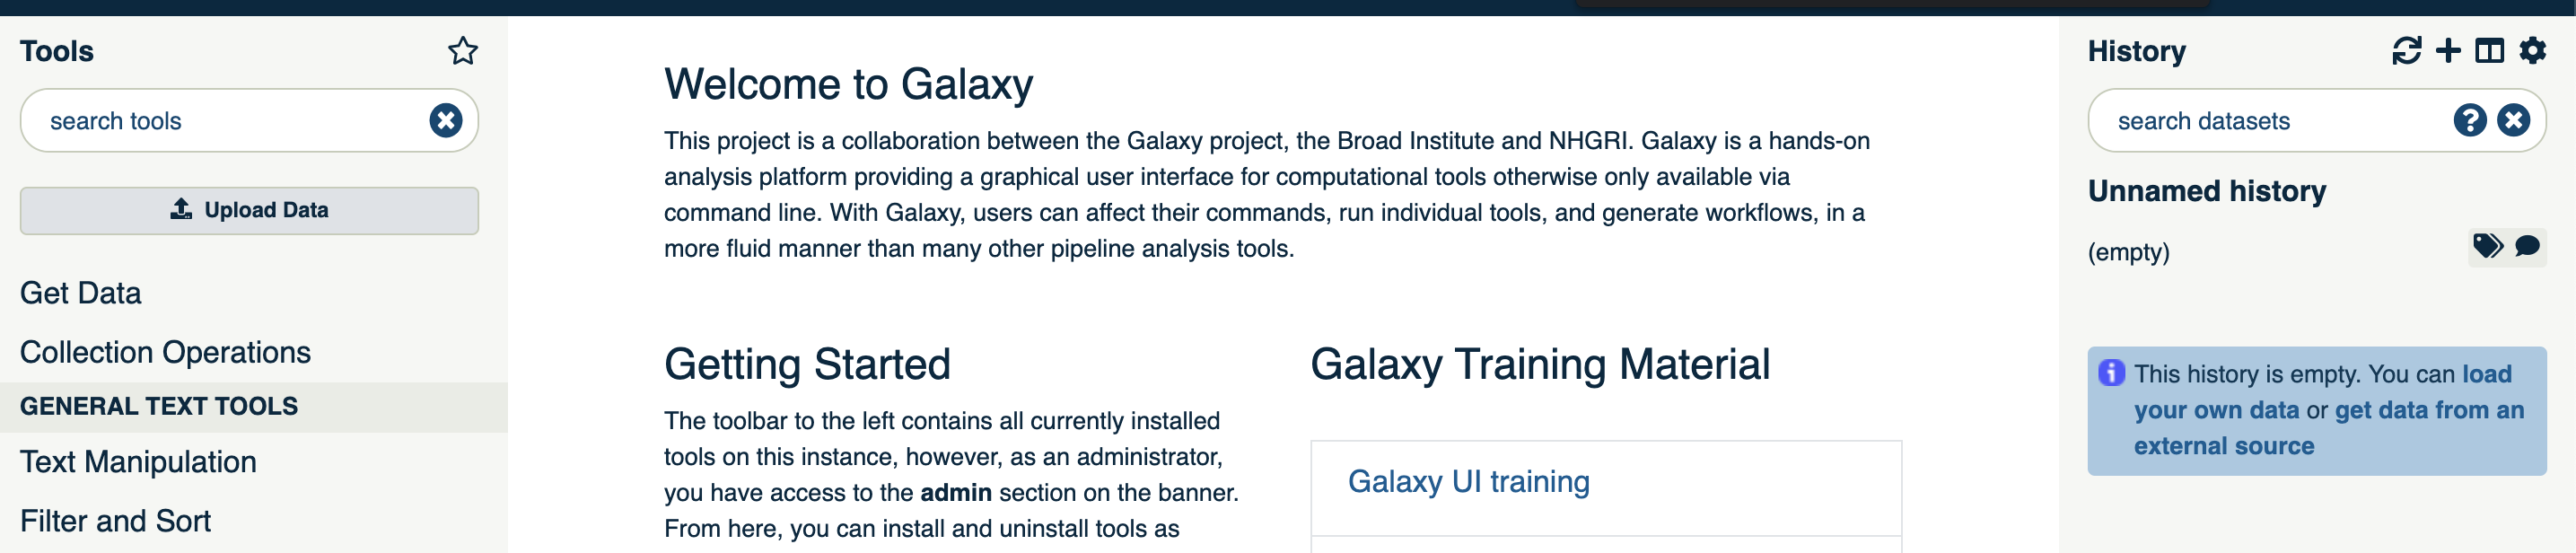 galaxy-interface.png